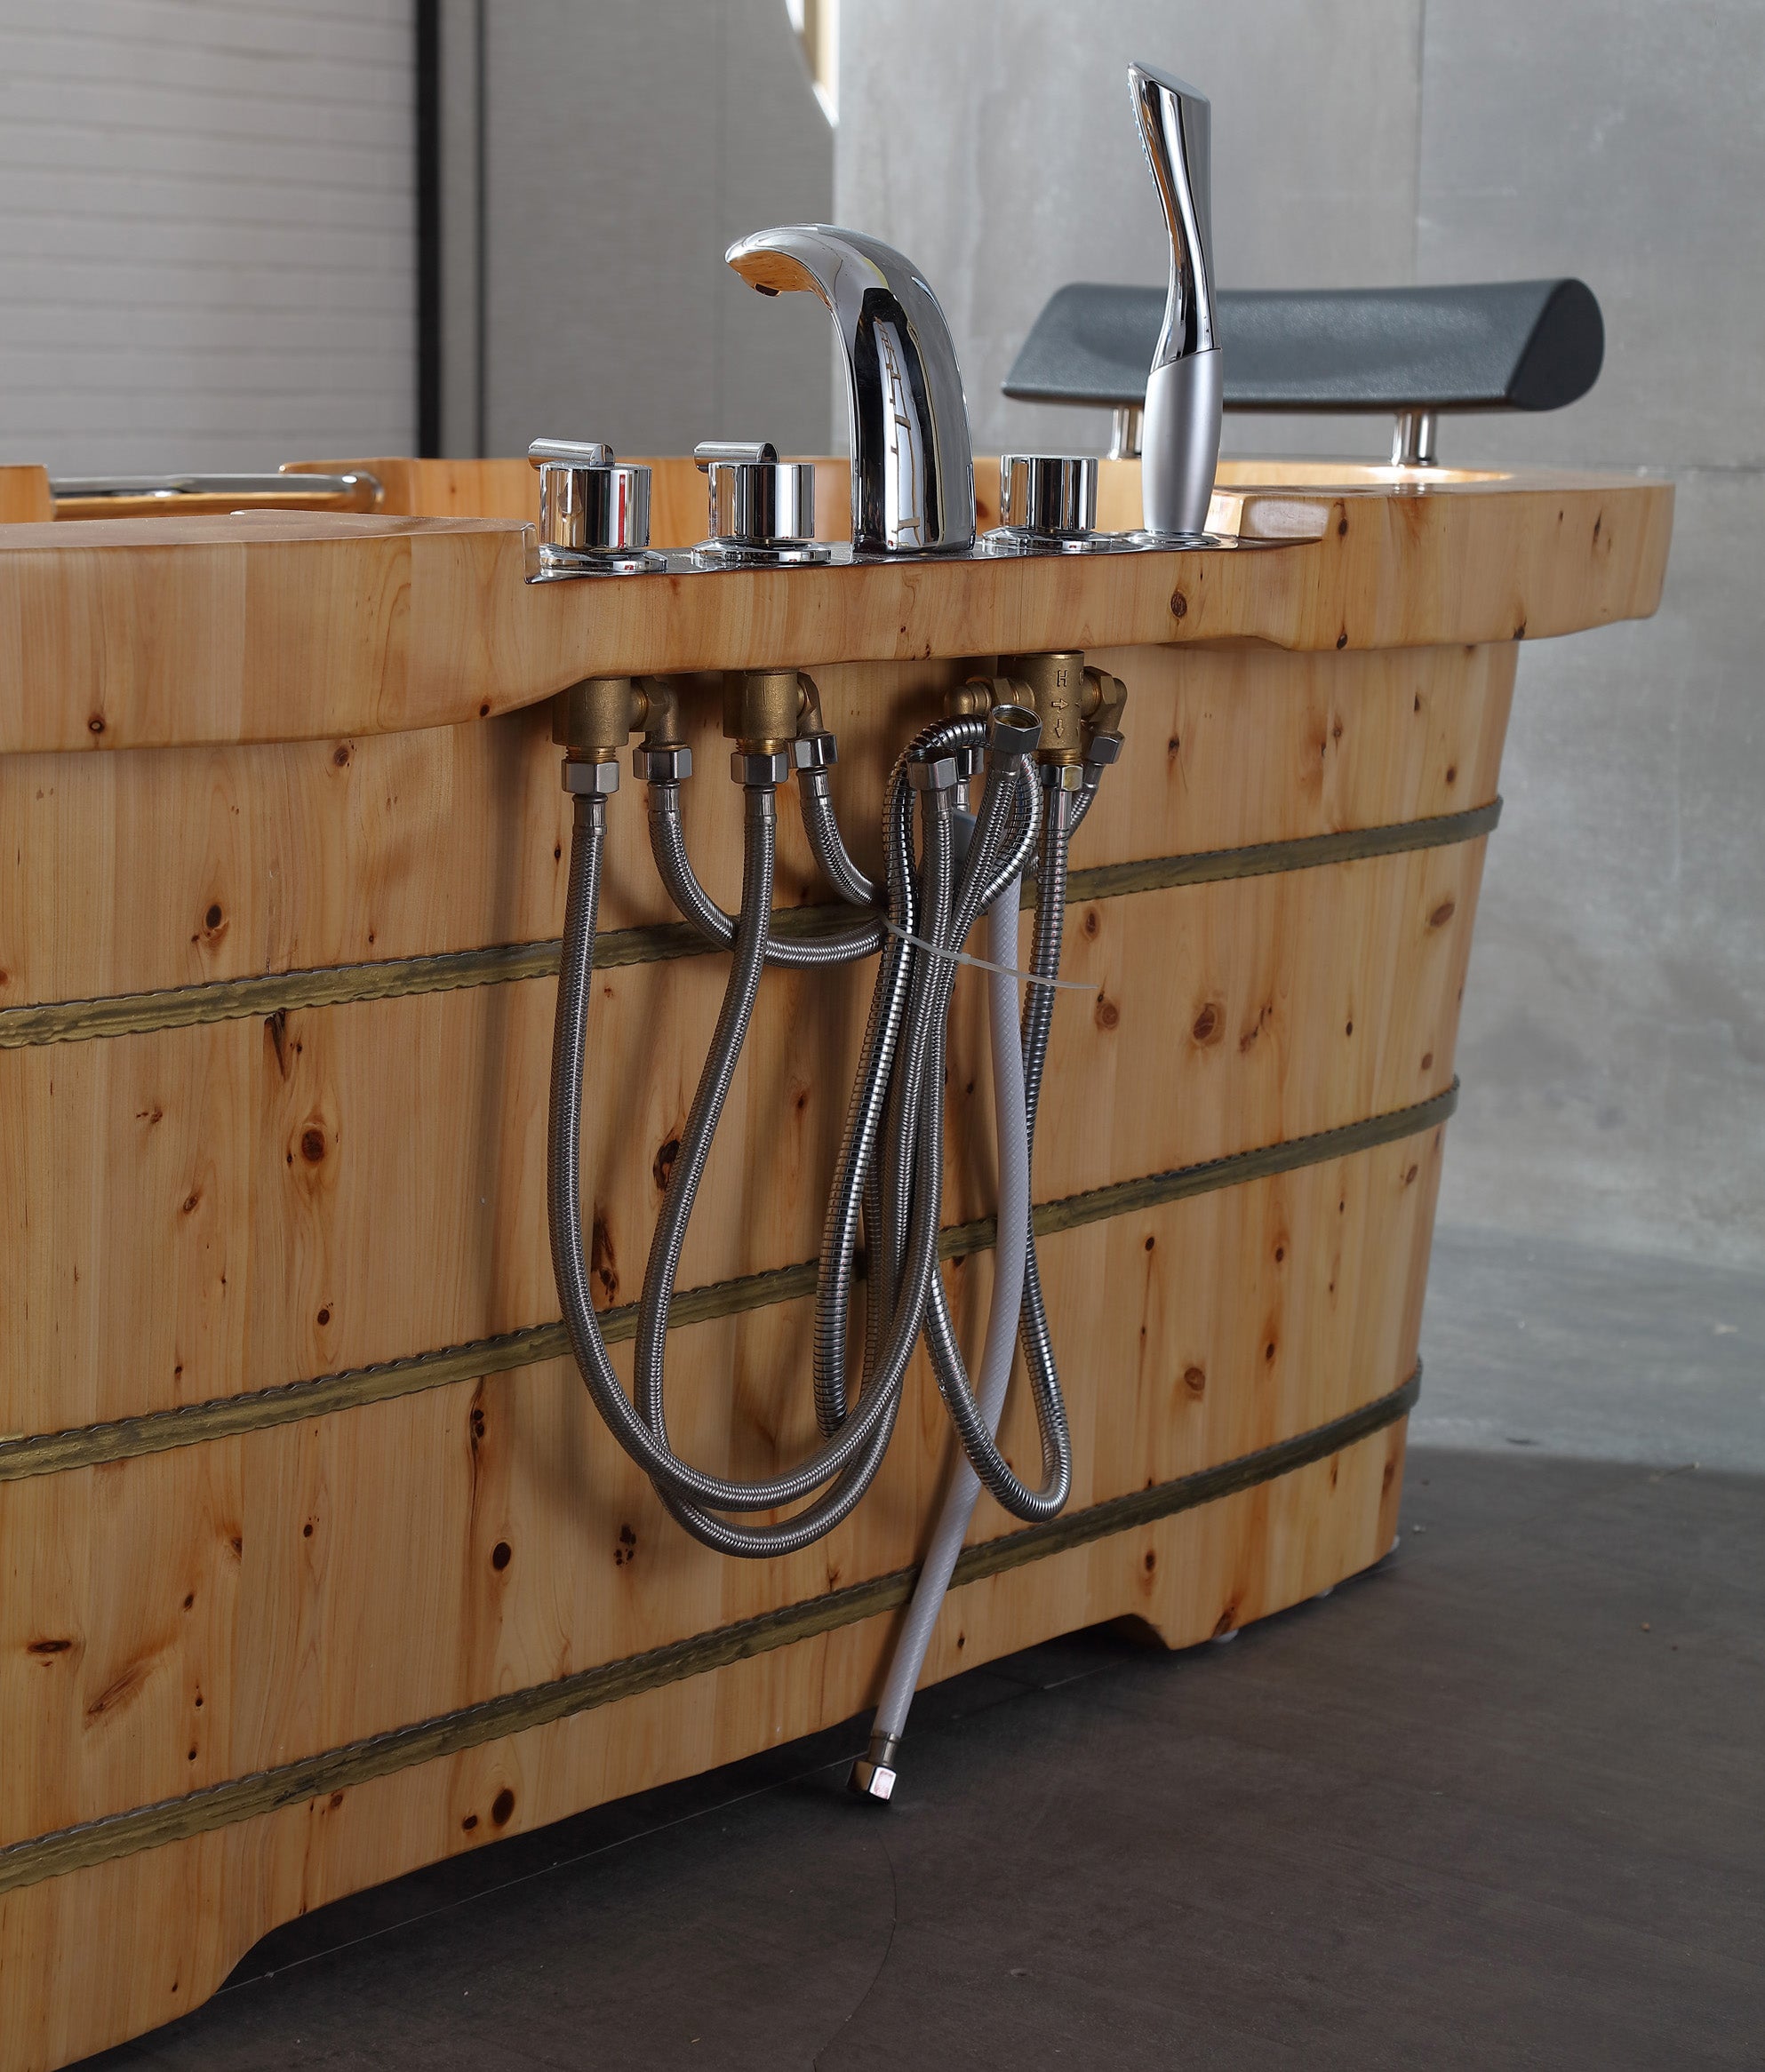 ALFI AB1130 Bathtub Free Standing Cedar Wooden with Fixtures & Headrests (65-inch)